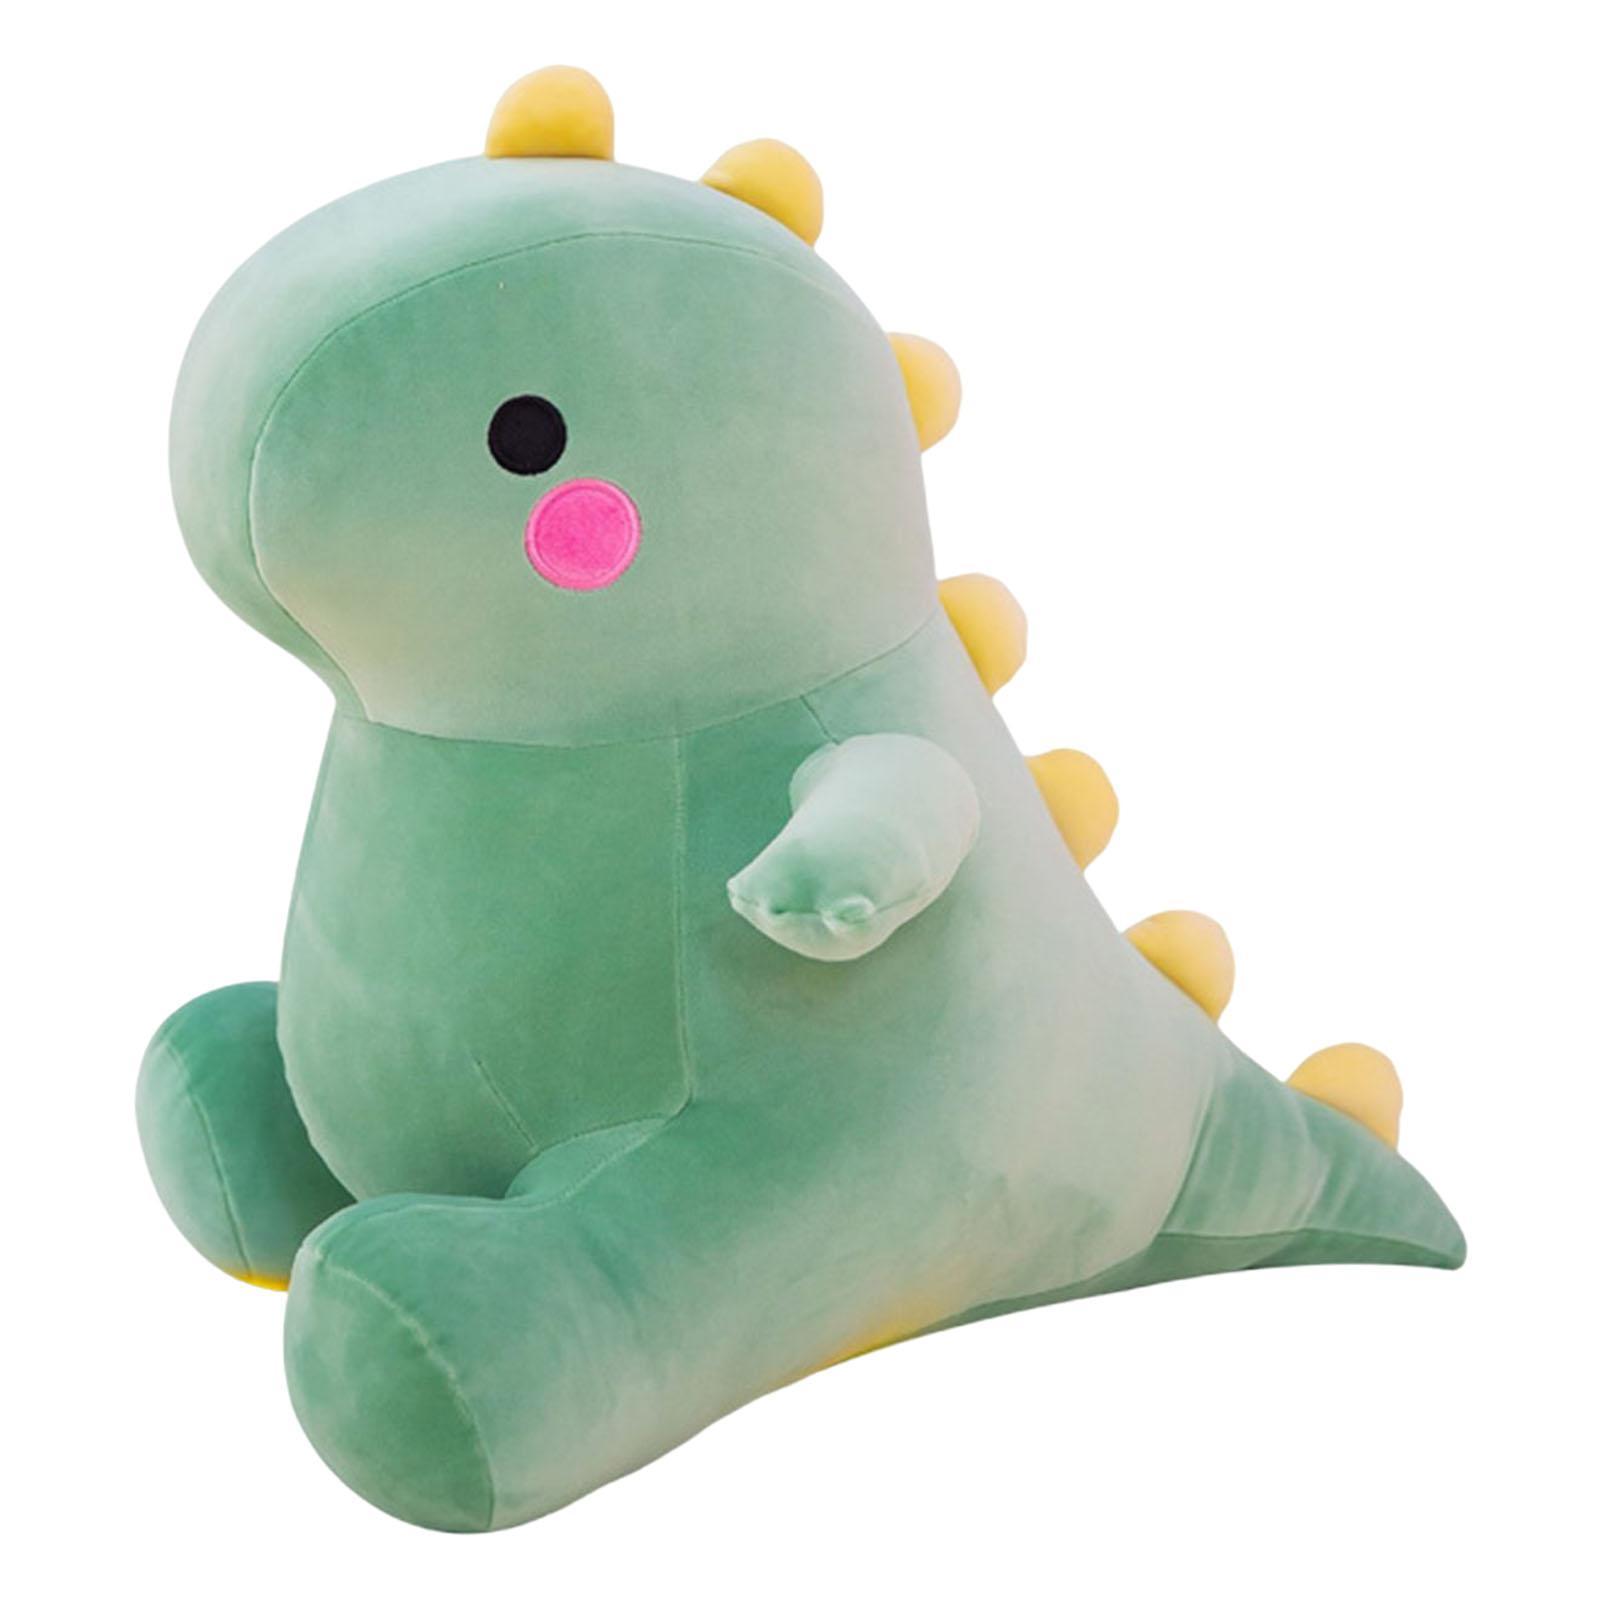 2pcs Cute Dinosaur Plush Toys Stuffed Animal Doll Pillows Birthday Gifts